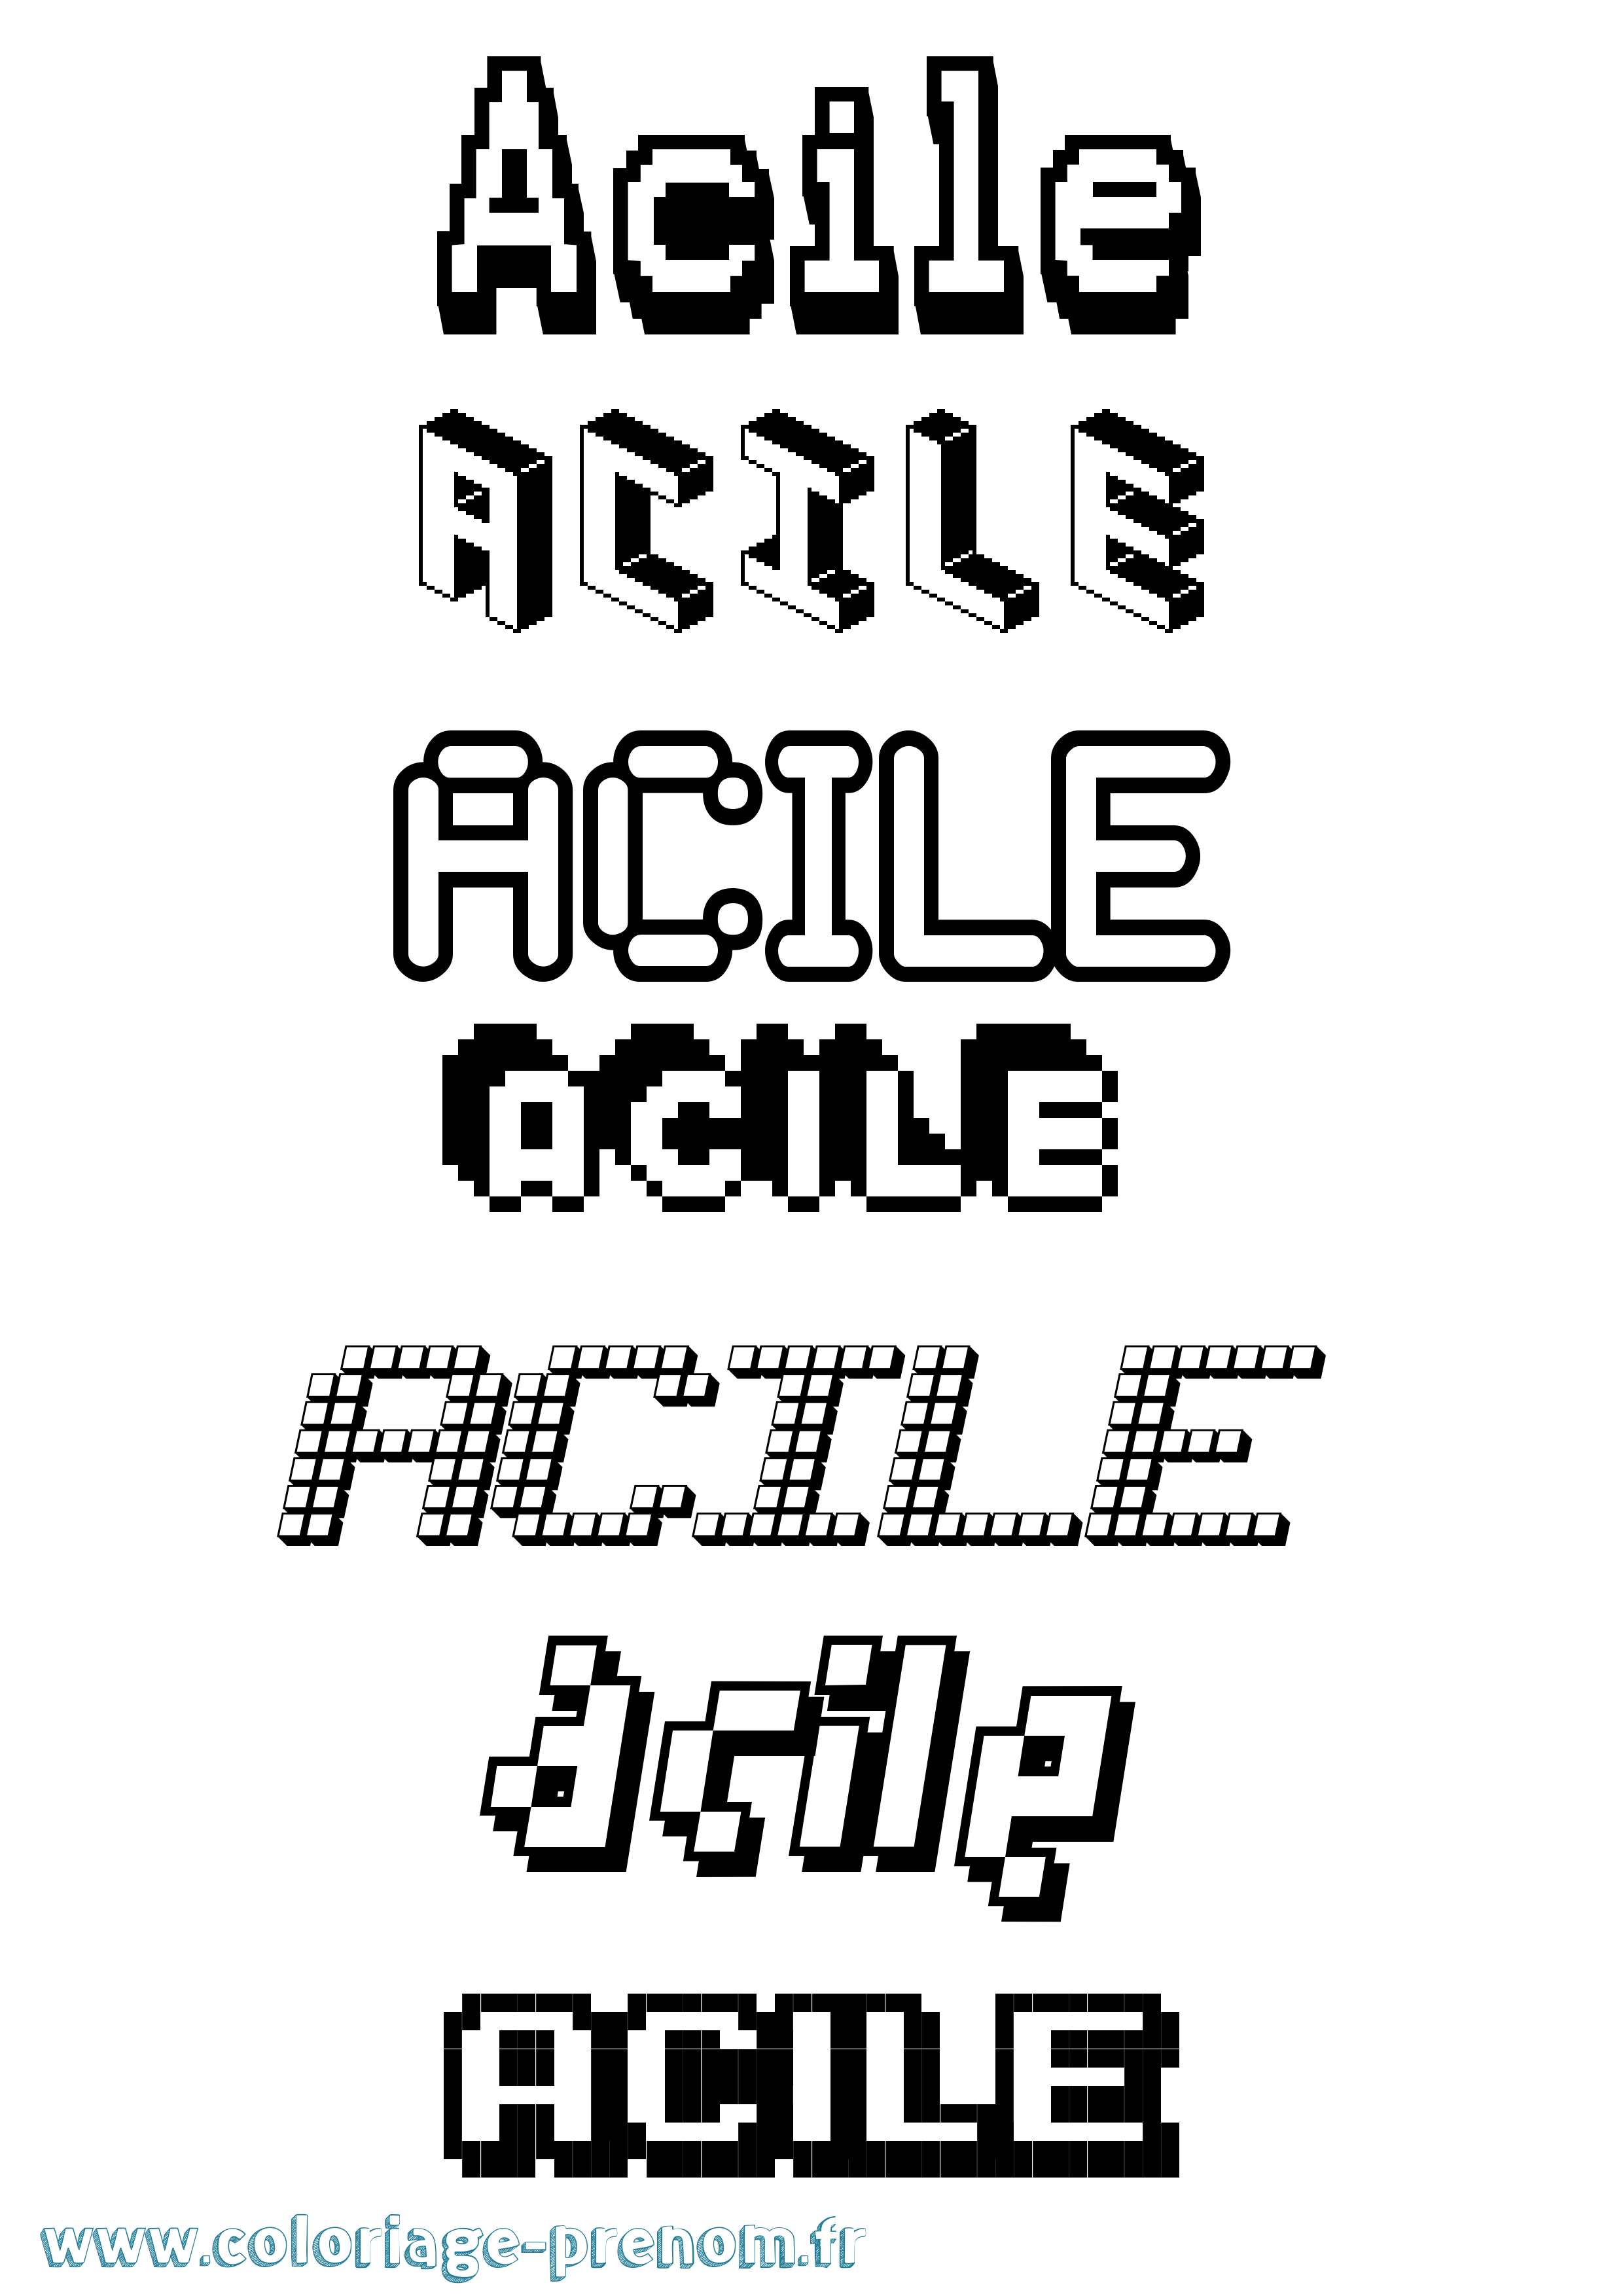 Coloriage prénom Acile Pixel